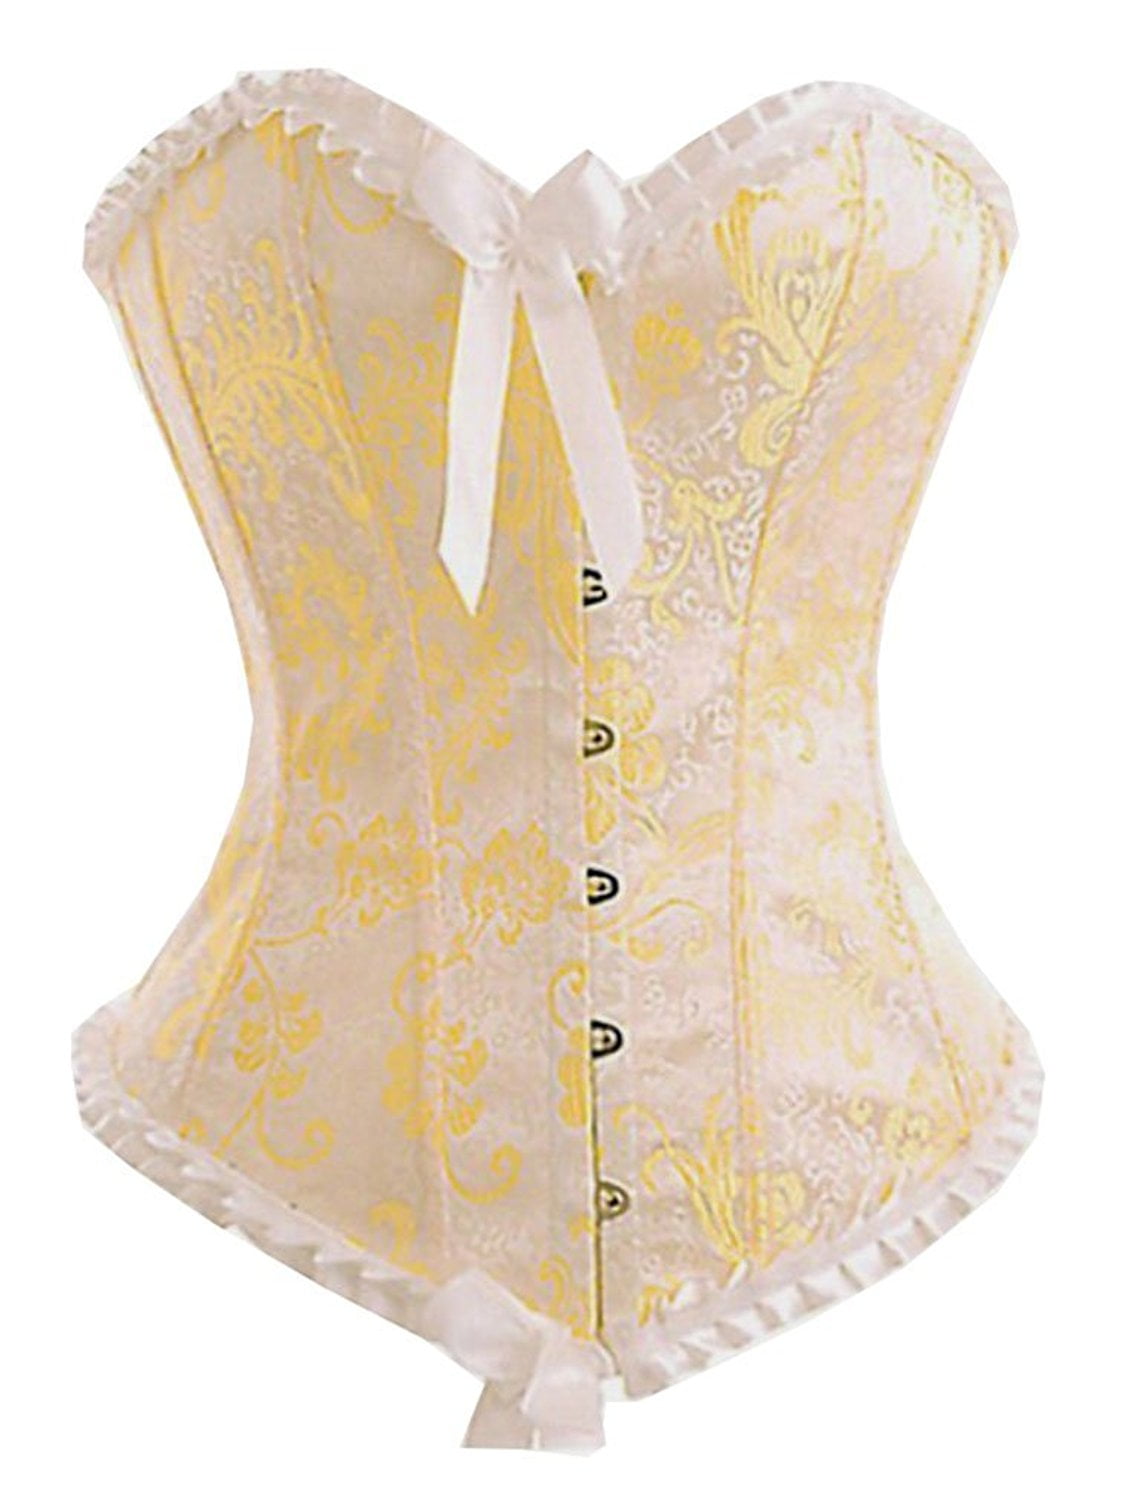 yellow corset top